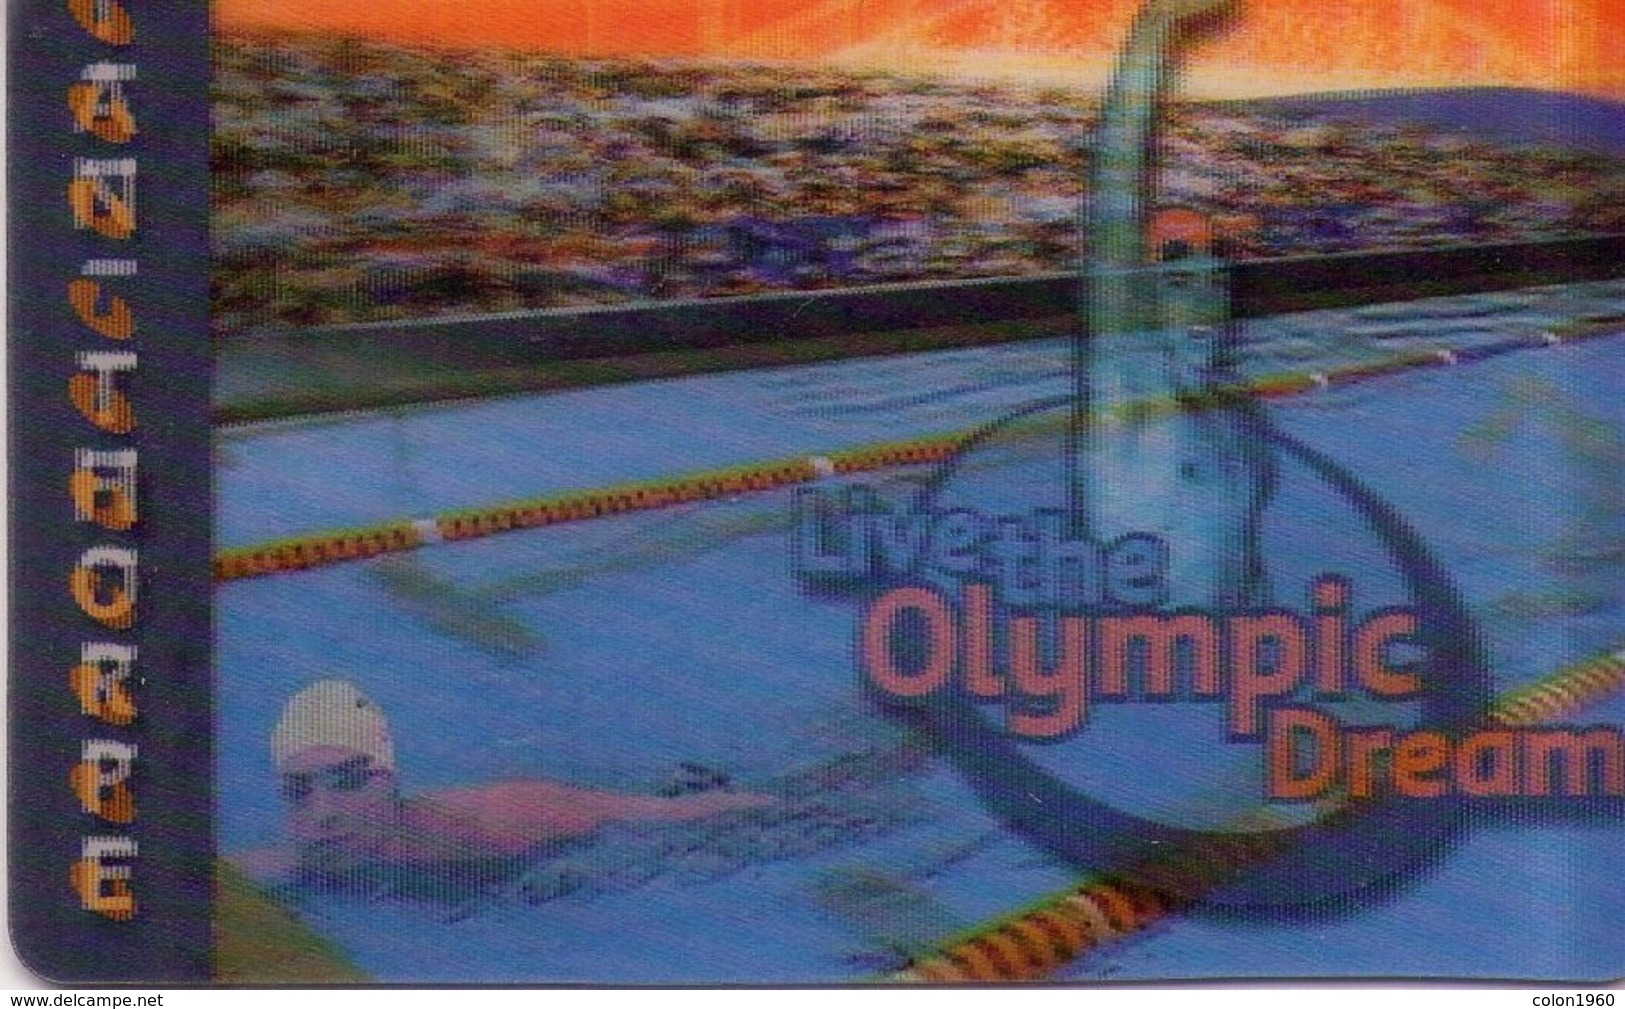 AUSTRALIA. 9900043PA. Holographic 3D. Living The Olympic Dream - Ian Thorpe. (012) - Australien